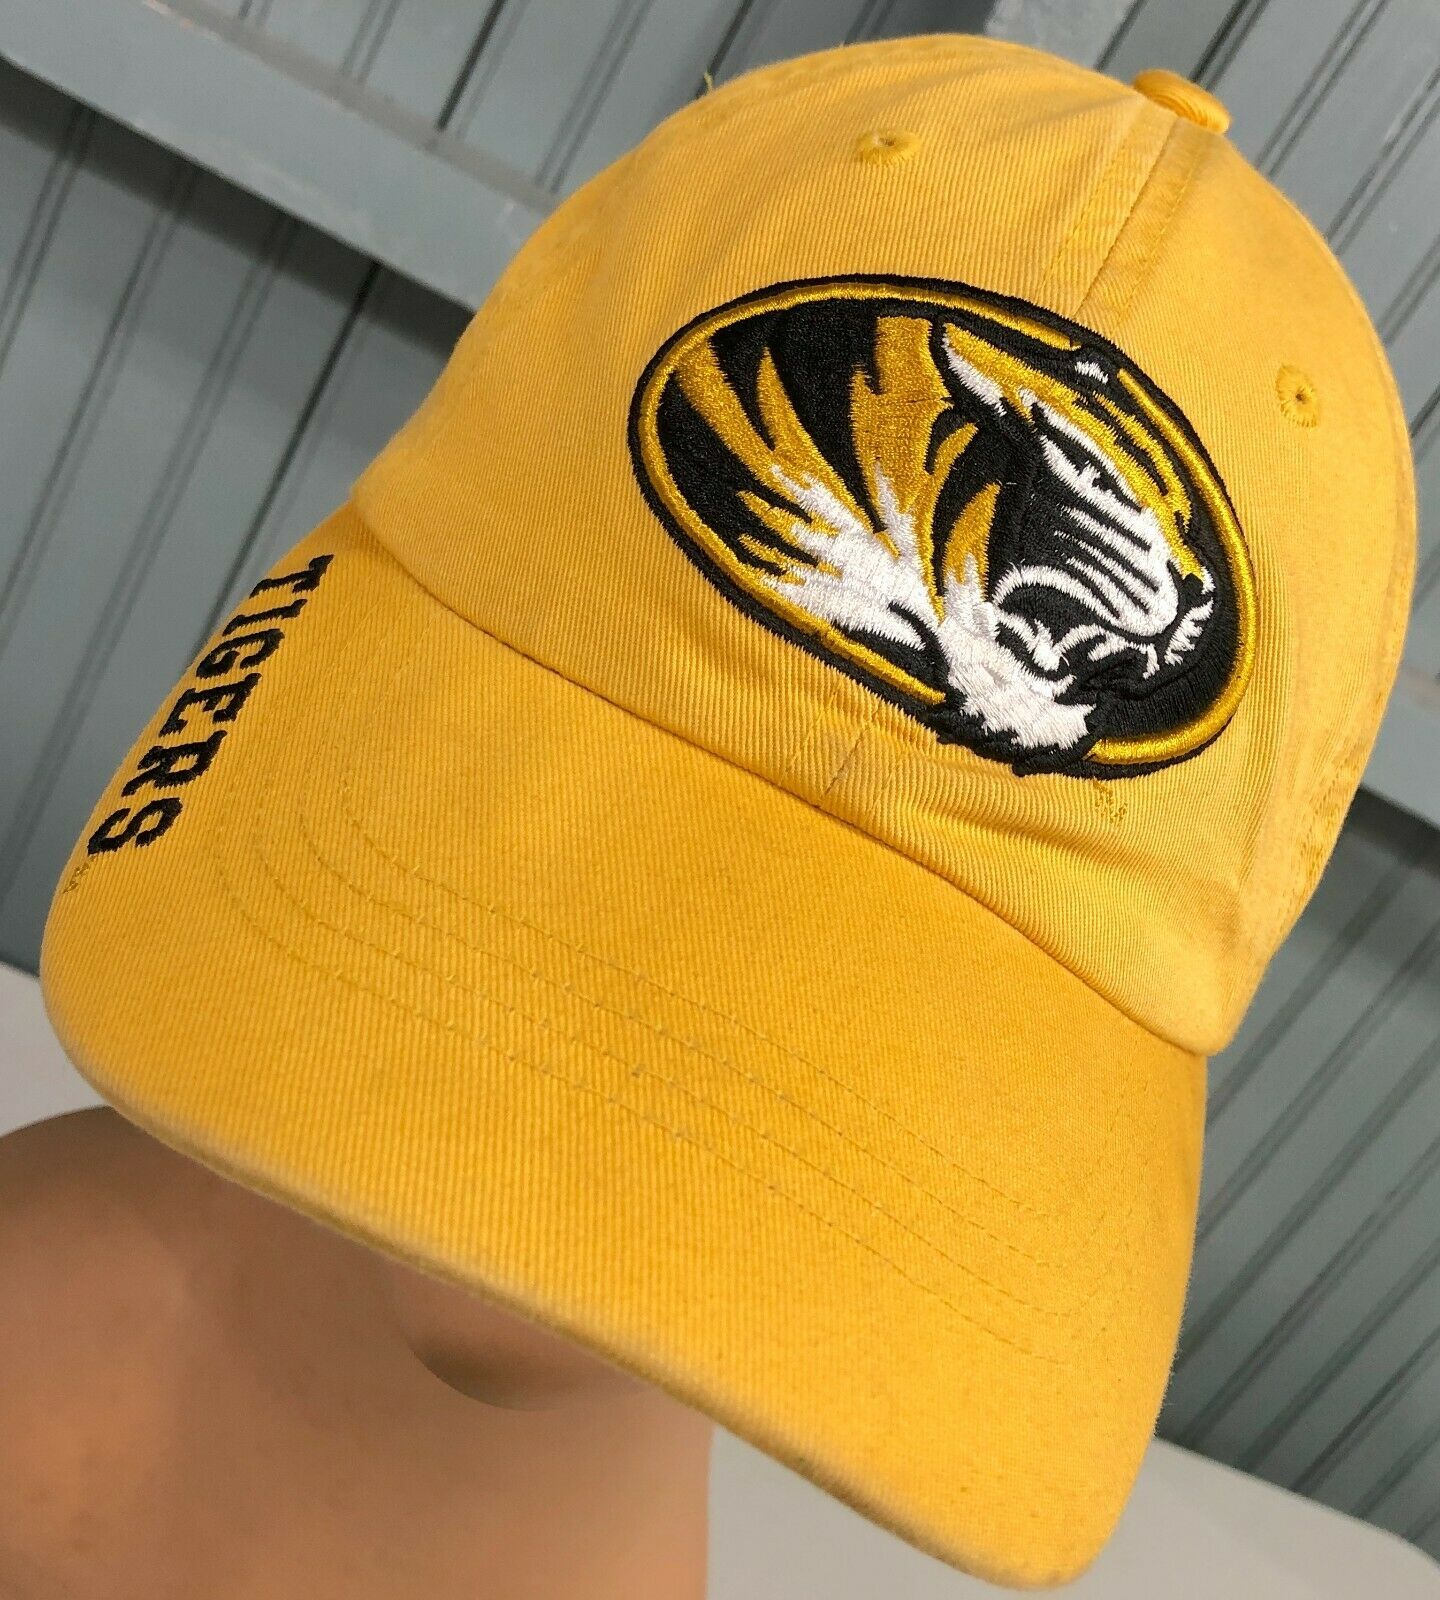 Mizzou Missouri Tigers Russell Athletic Yellow Strapback Baseball Hat Cap  - $16.42